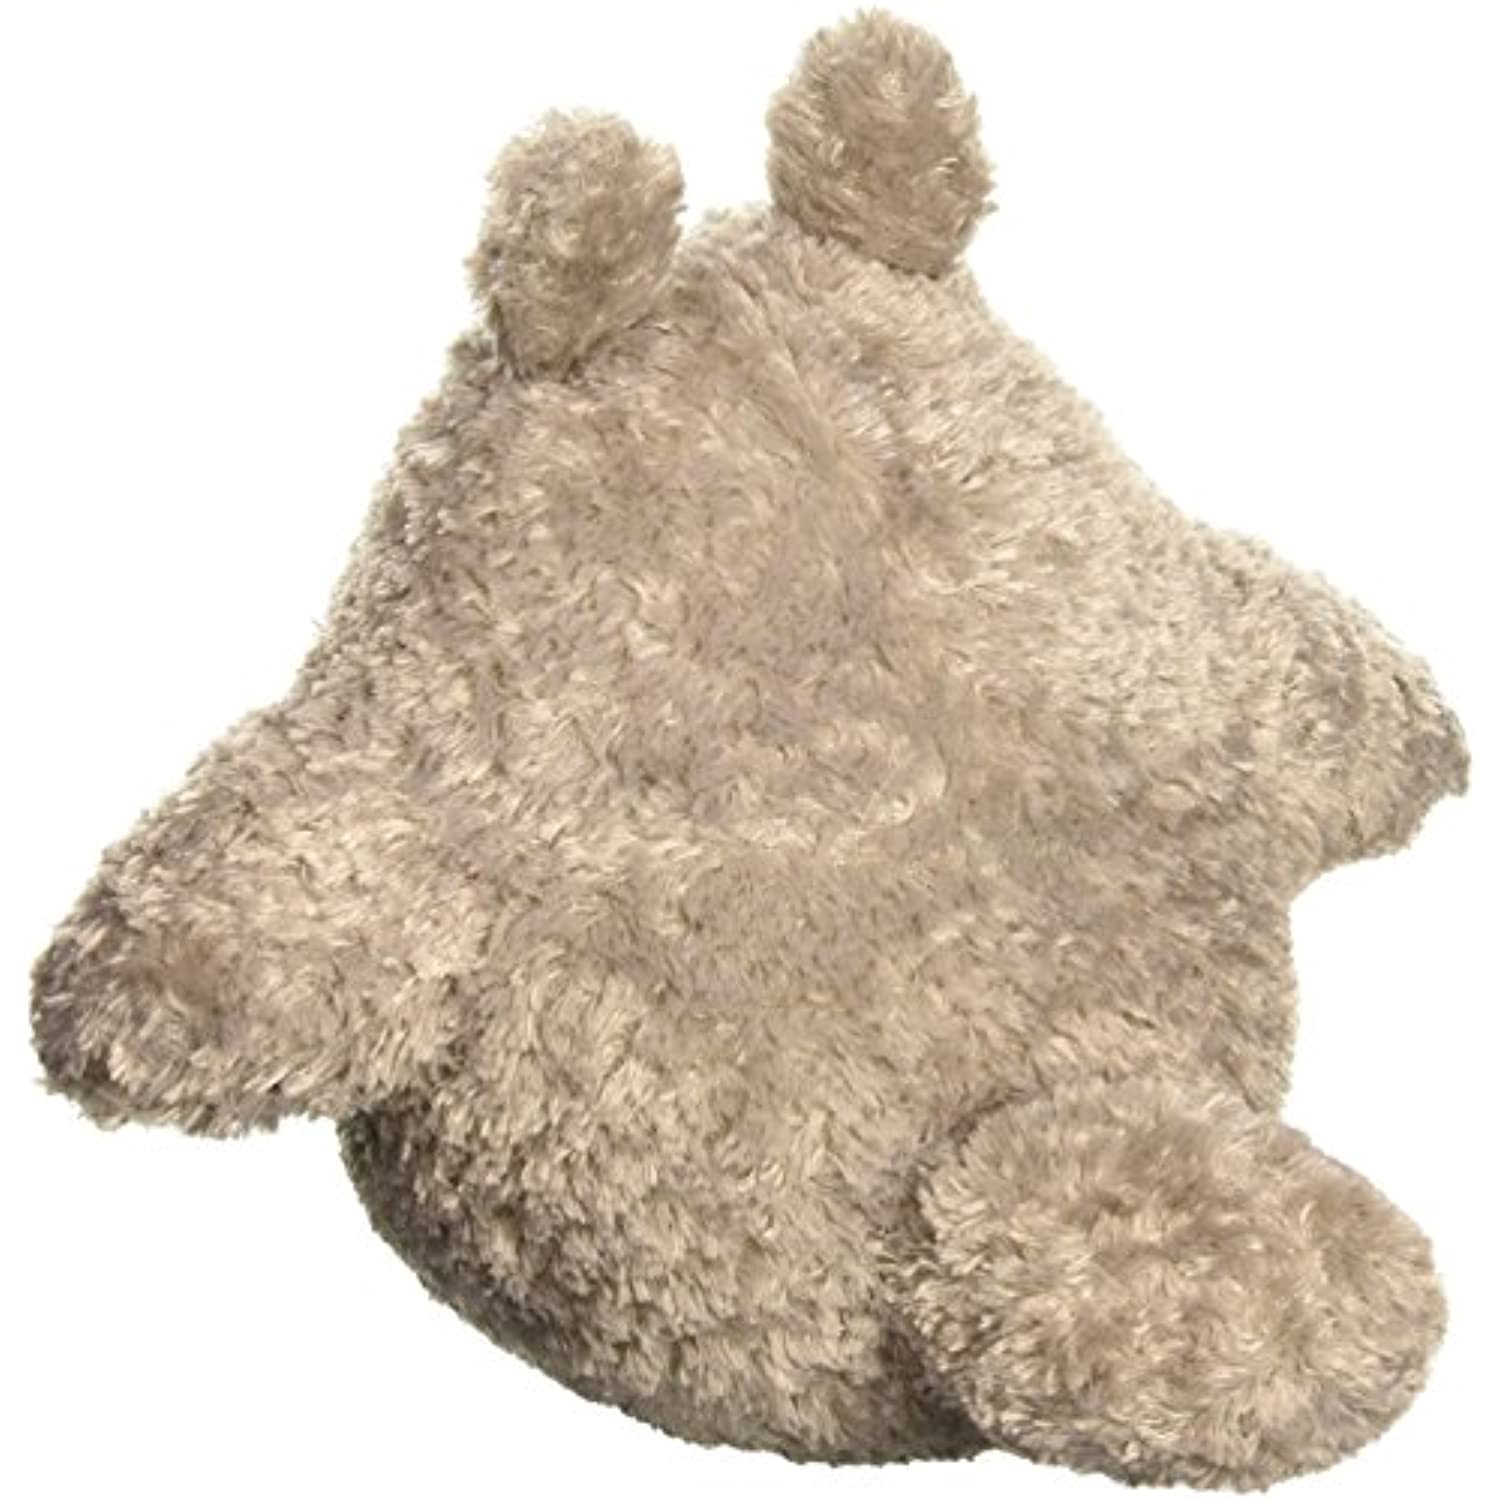 GUND Fluffy Totoro Stuffed Animal Plush in Gray, 9"